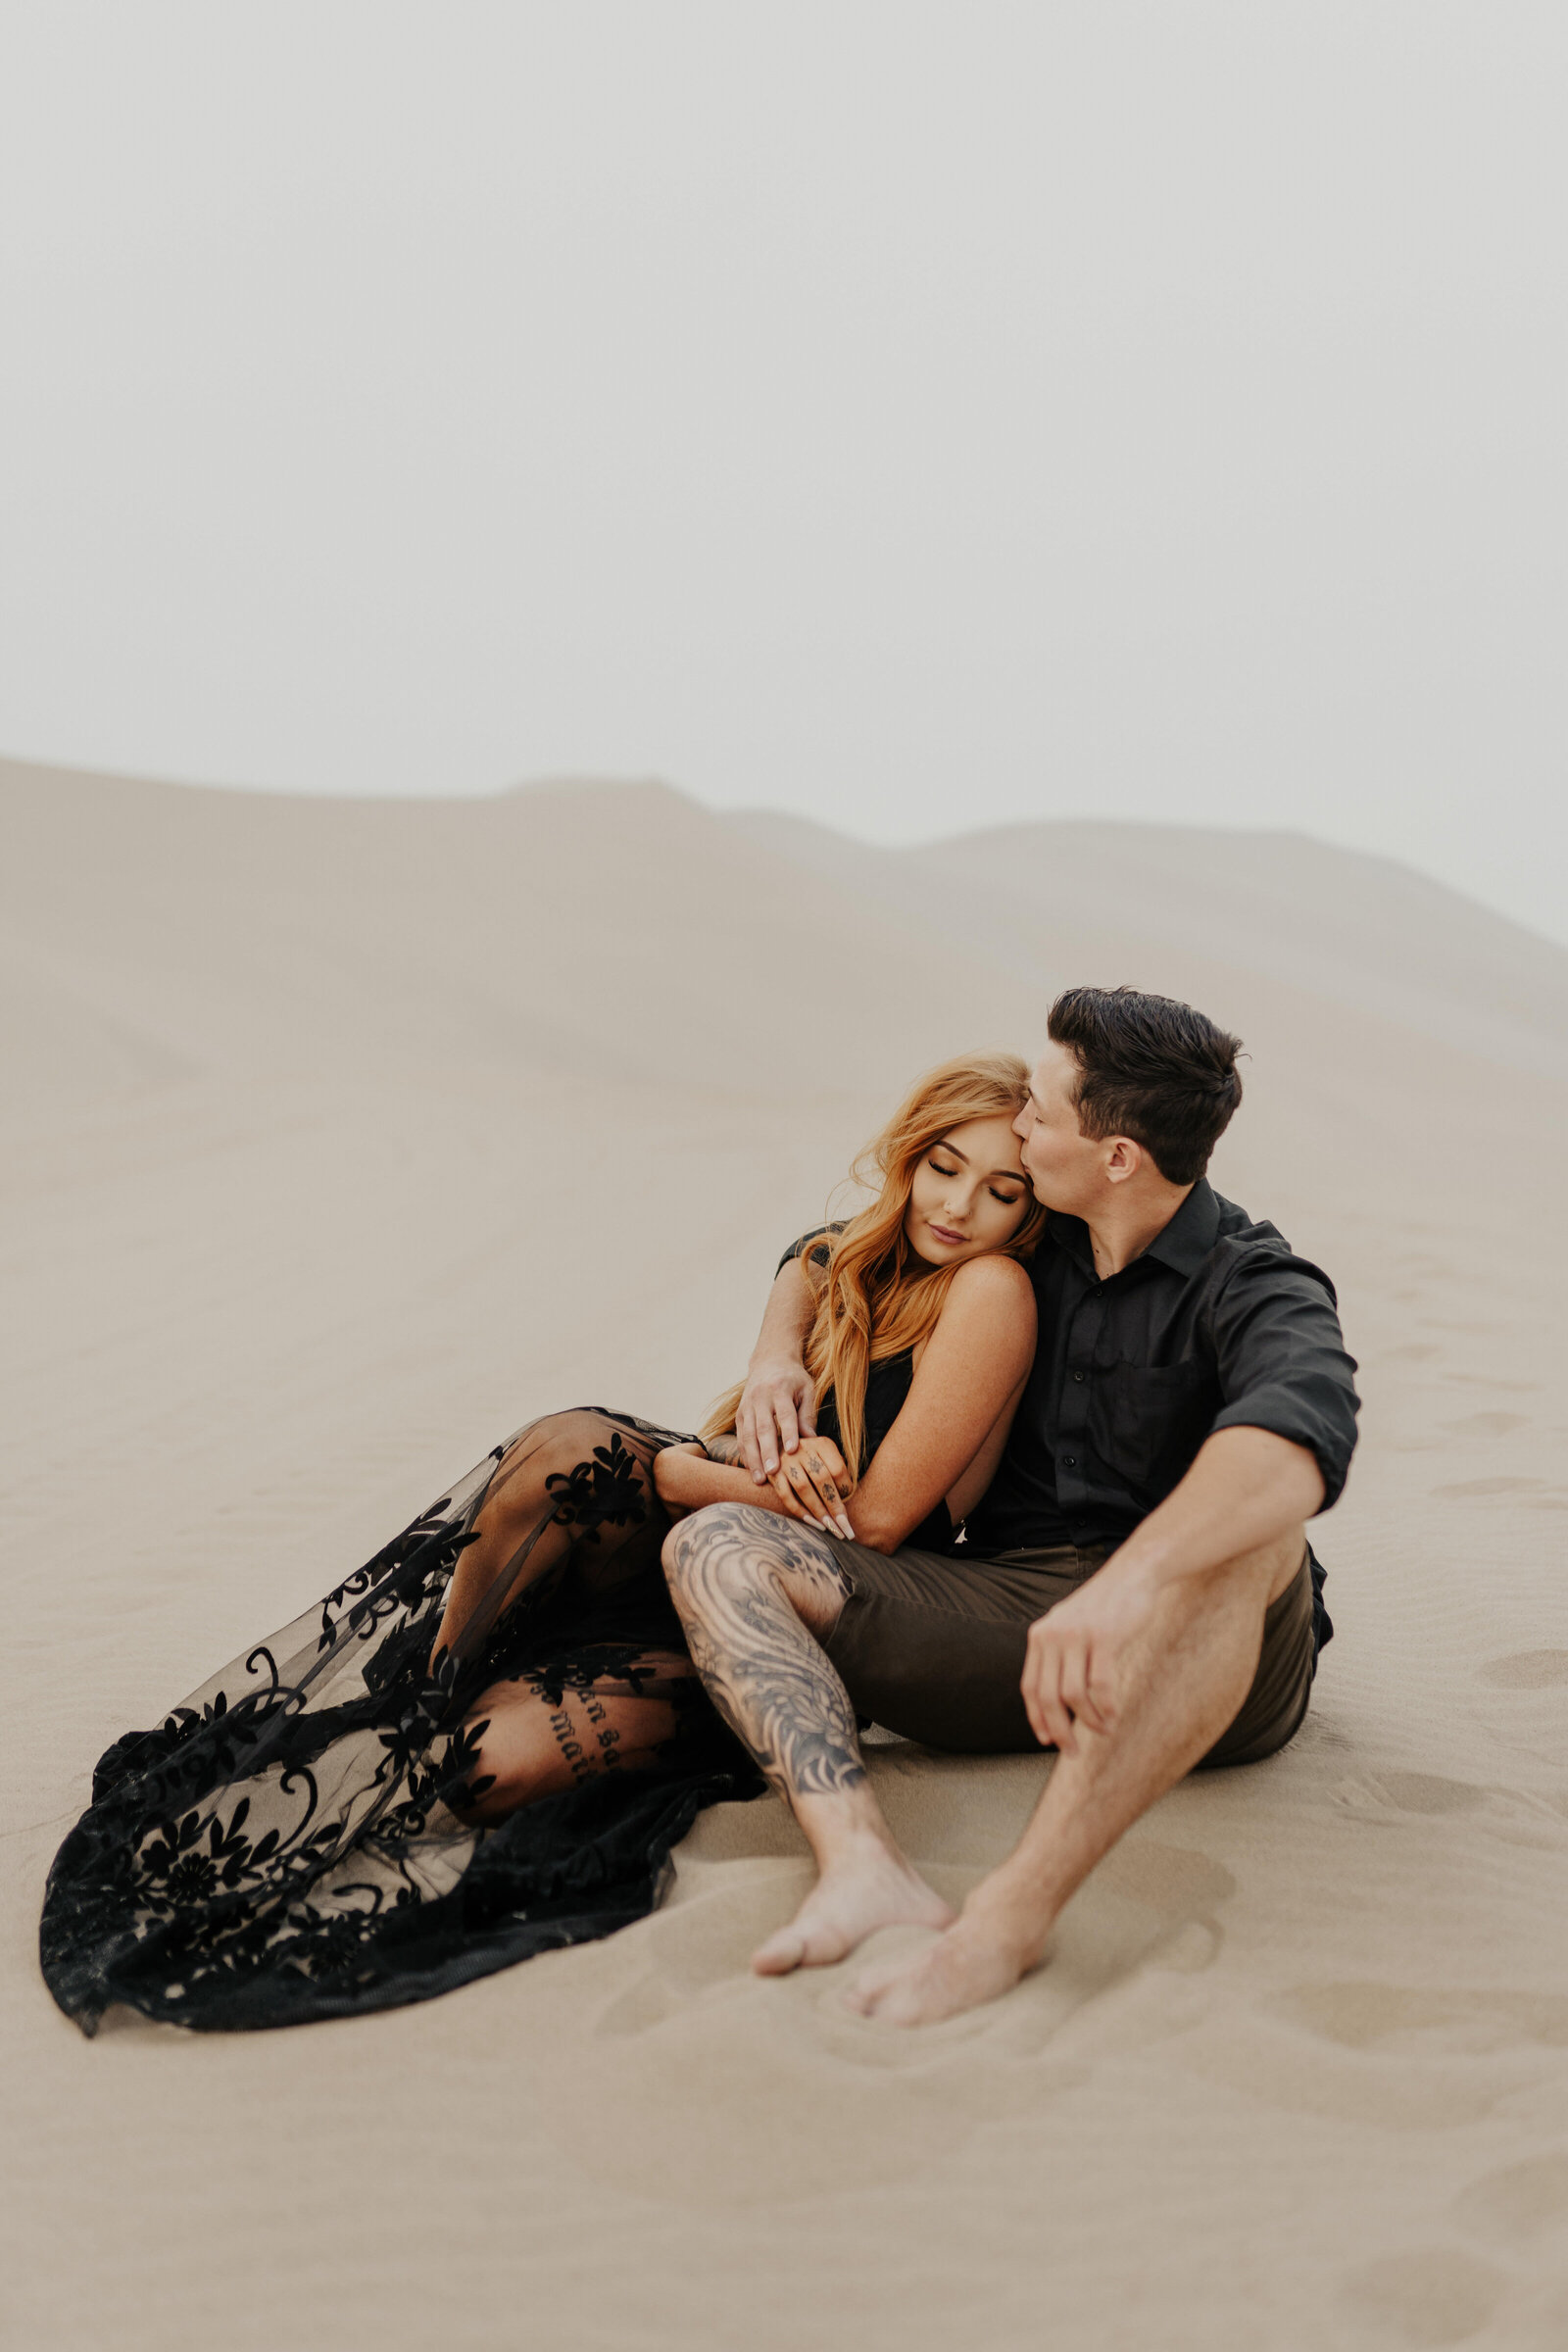 Sand Dunes Couples Photos - Raquel King Photography59